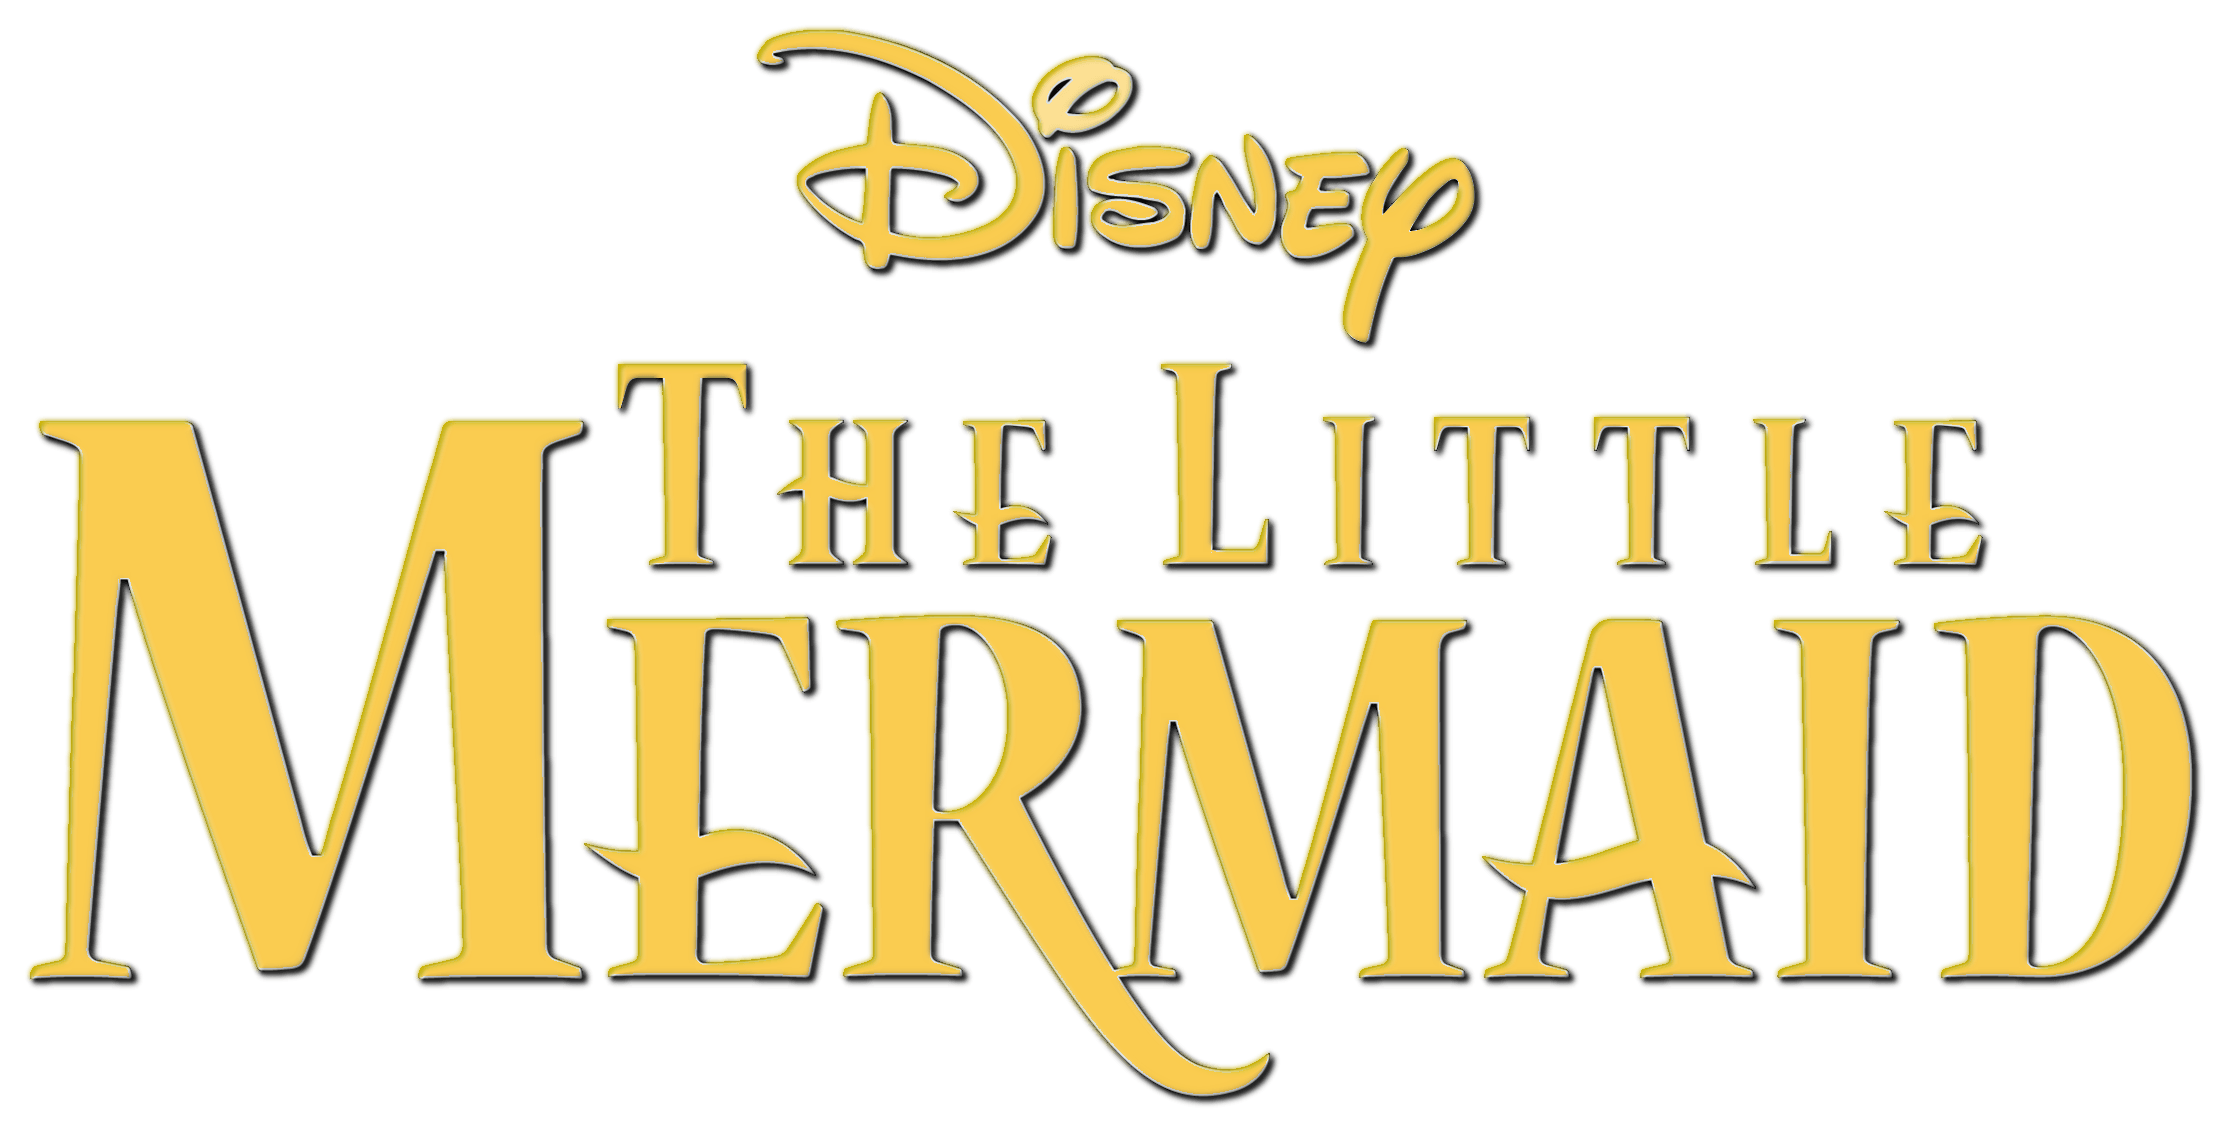 Disney Little Mermaid Logo - The Little Mermaid images The Little Mermaid Logo HD wallpaper and ...